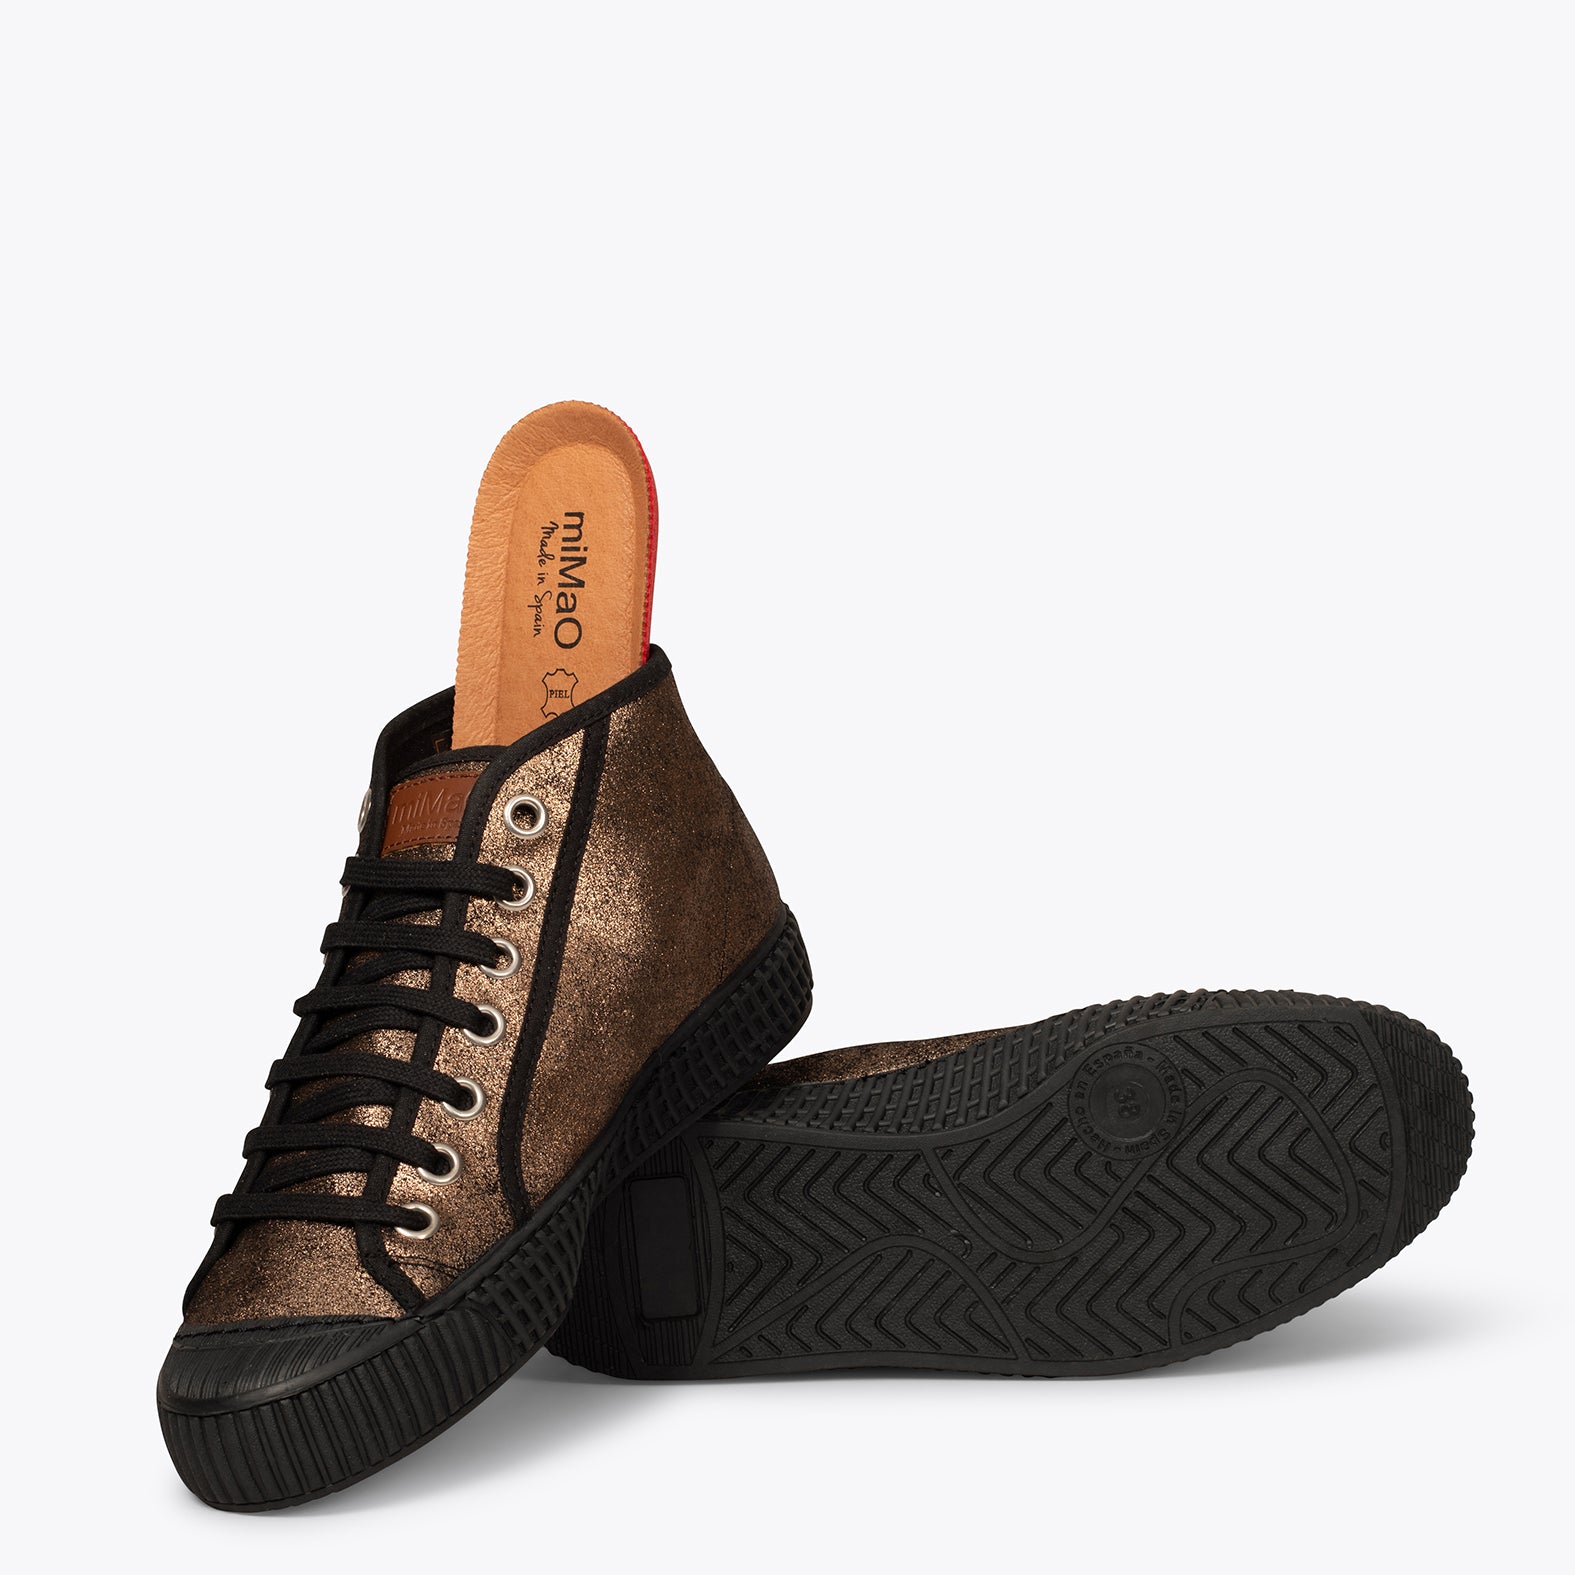 JUMP – COPPER metallic nappa leather sneakers